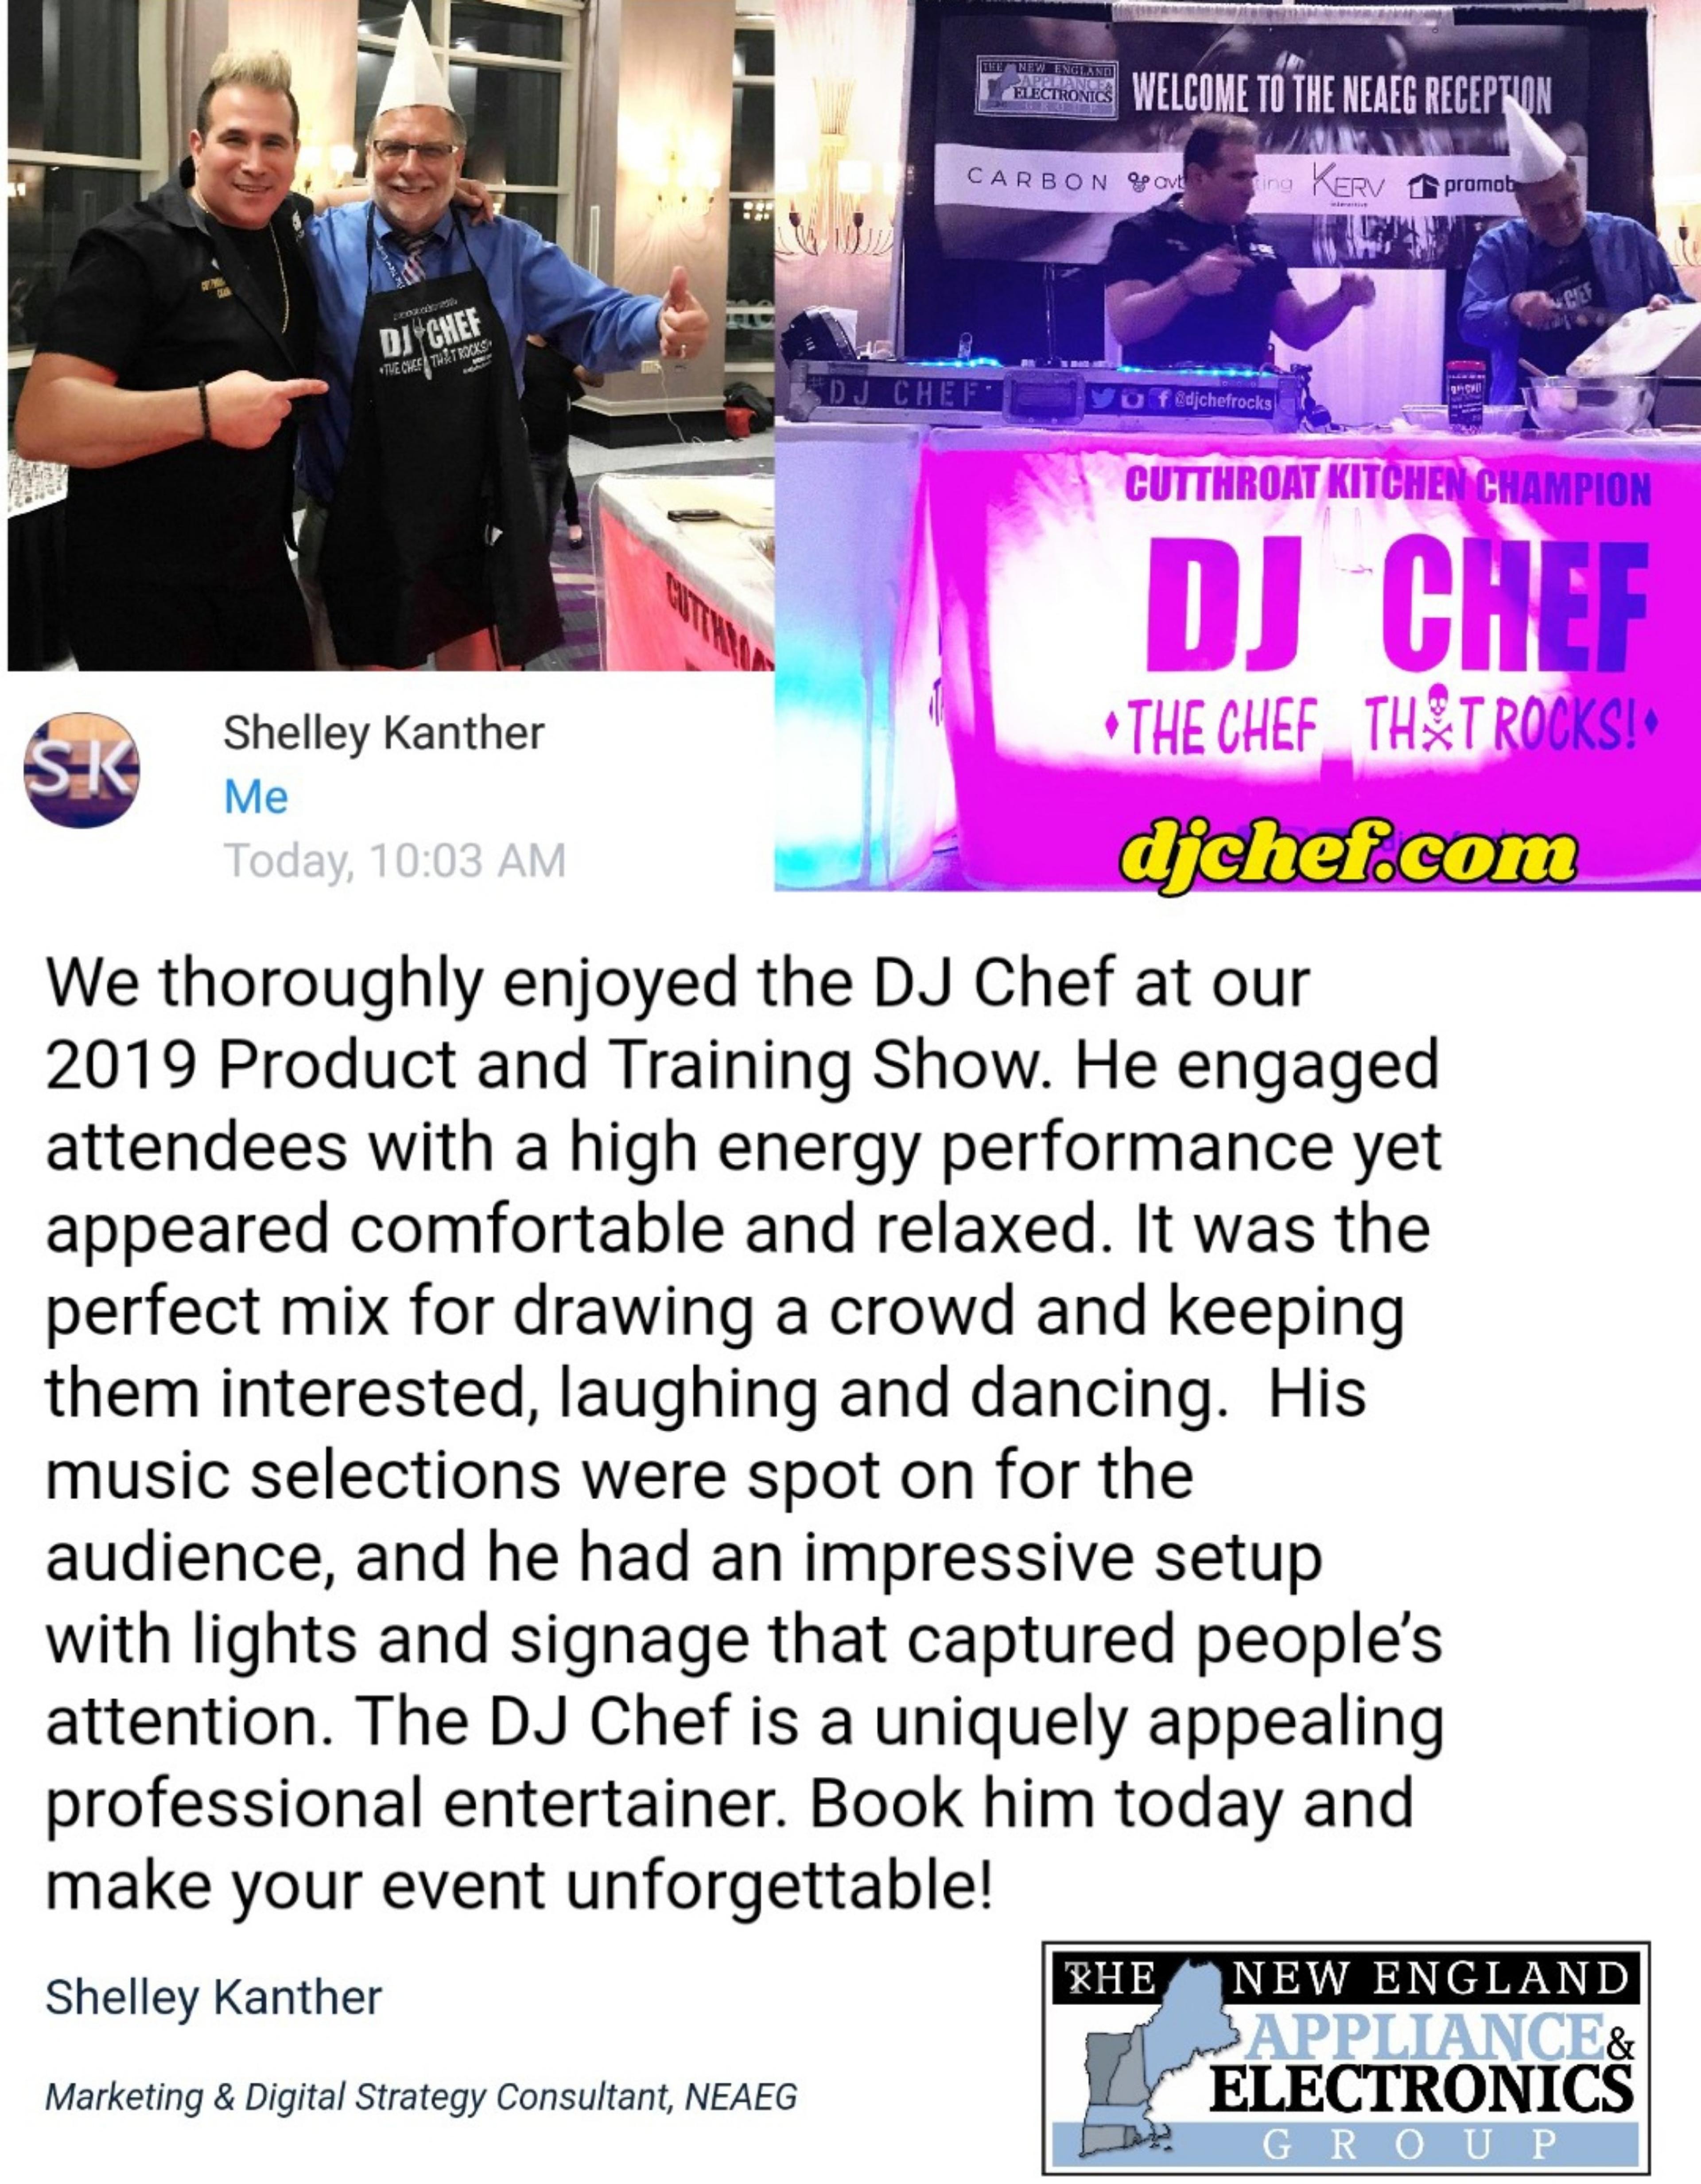 DJ CHEF "The Chef That Rocks!" 